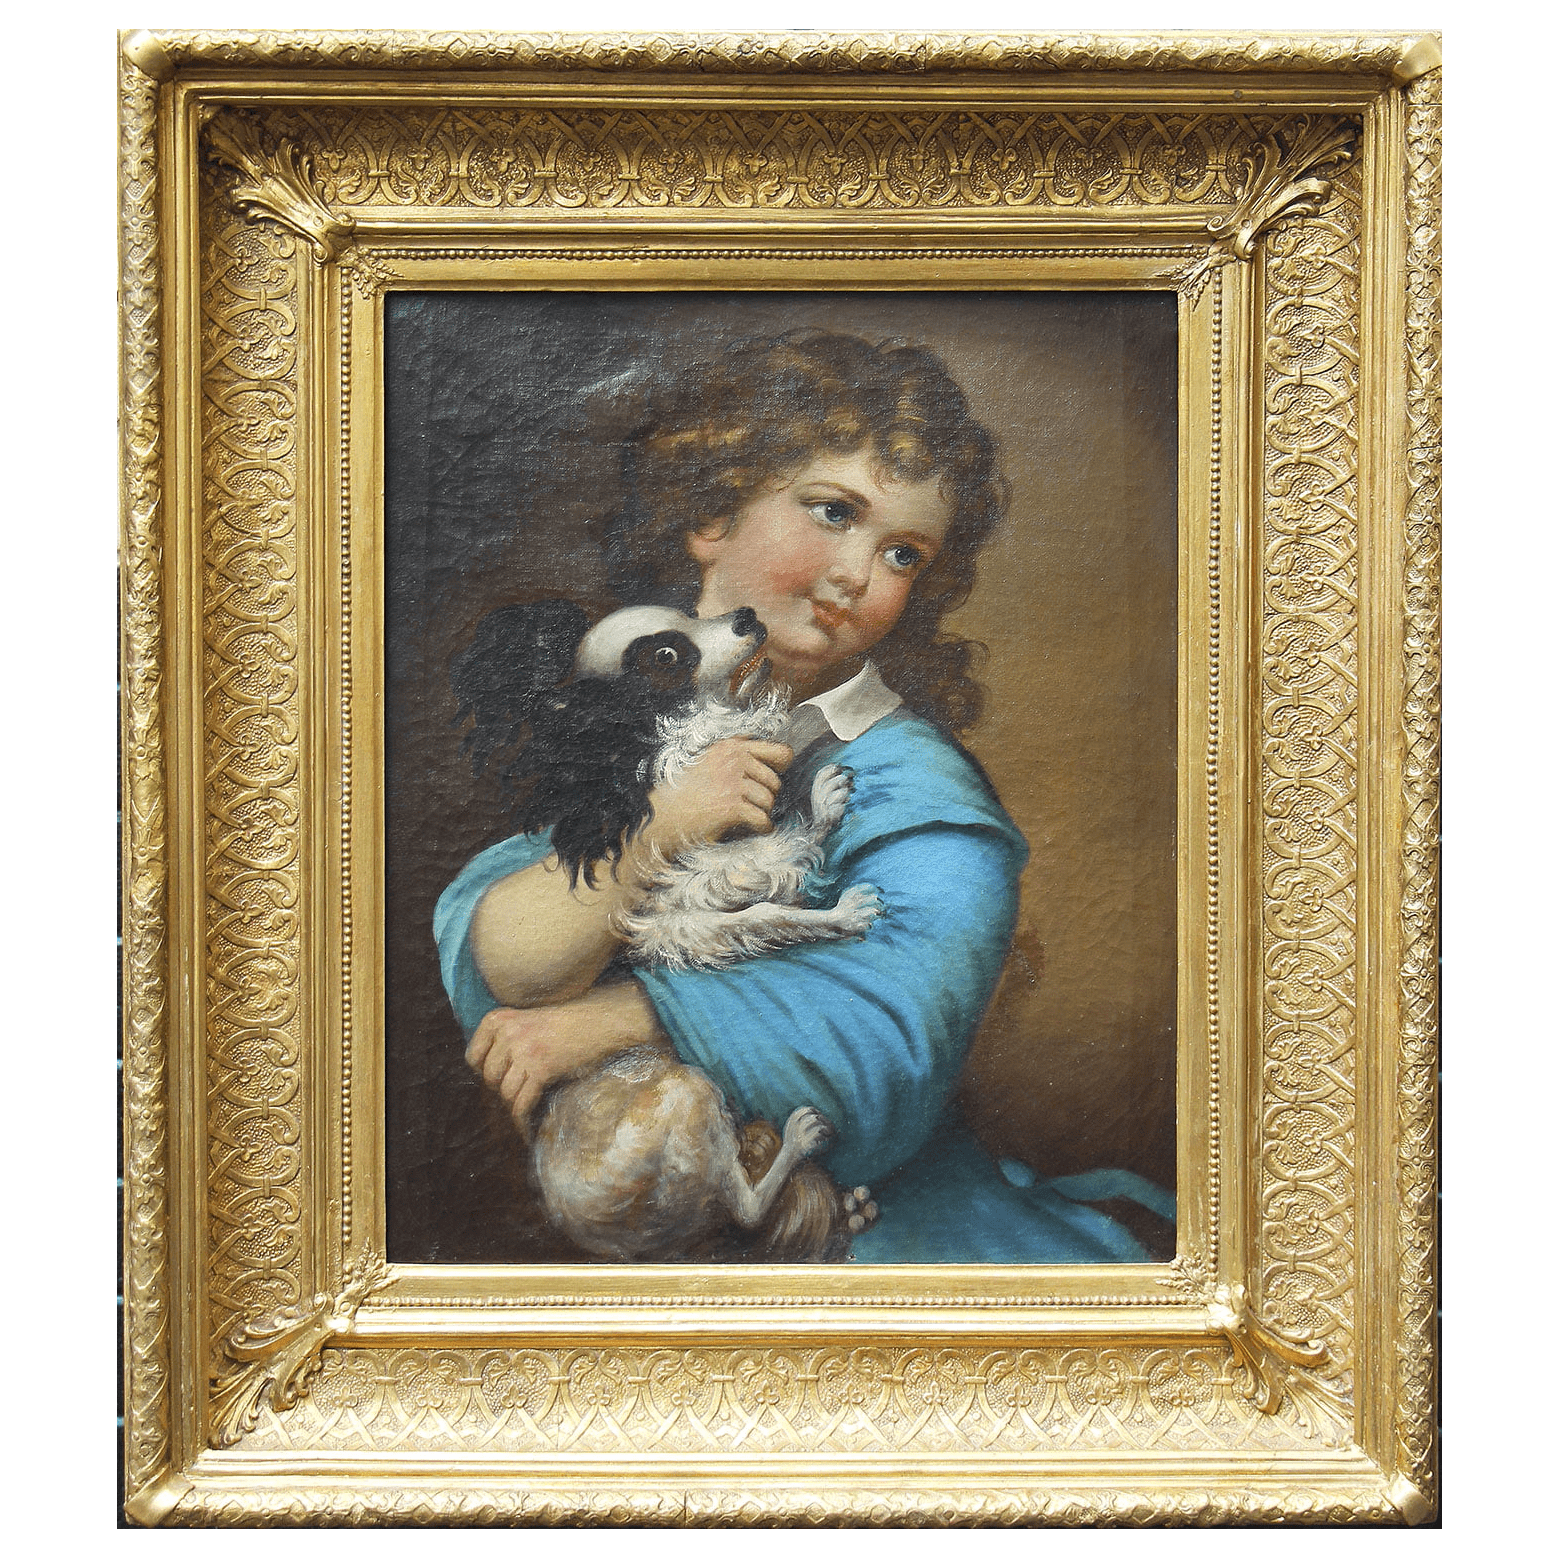 Картина «Мальчик с собачкой» конца 19 века, Зап. Европа, холст, масло